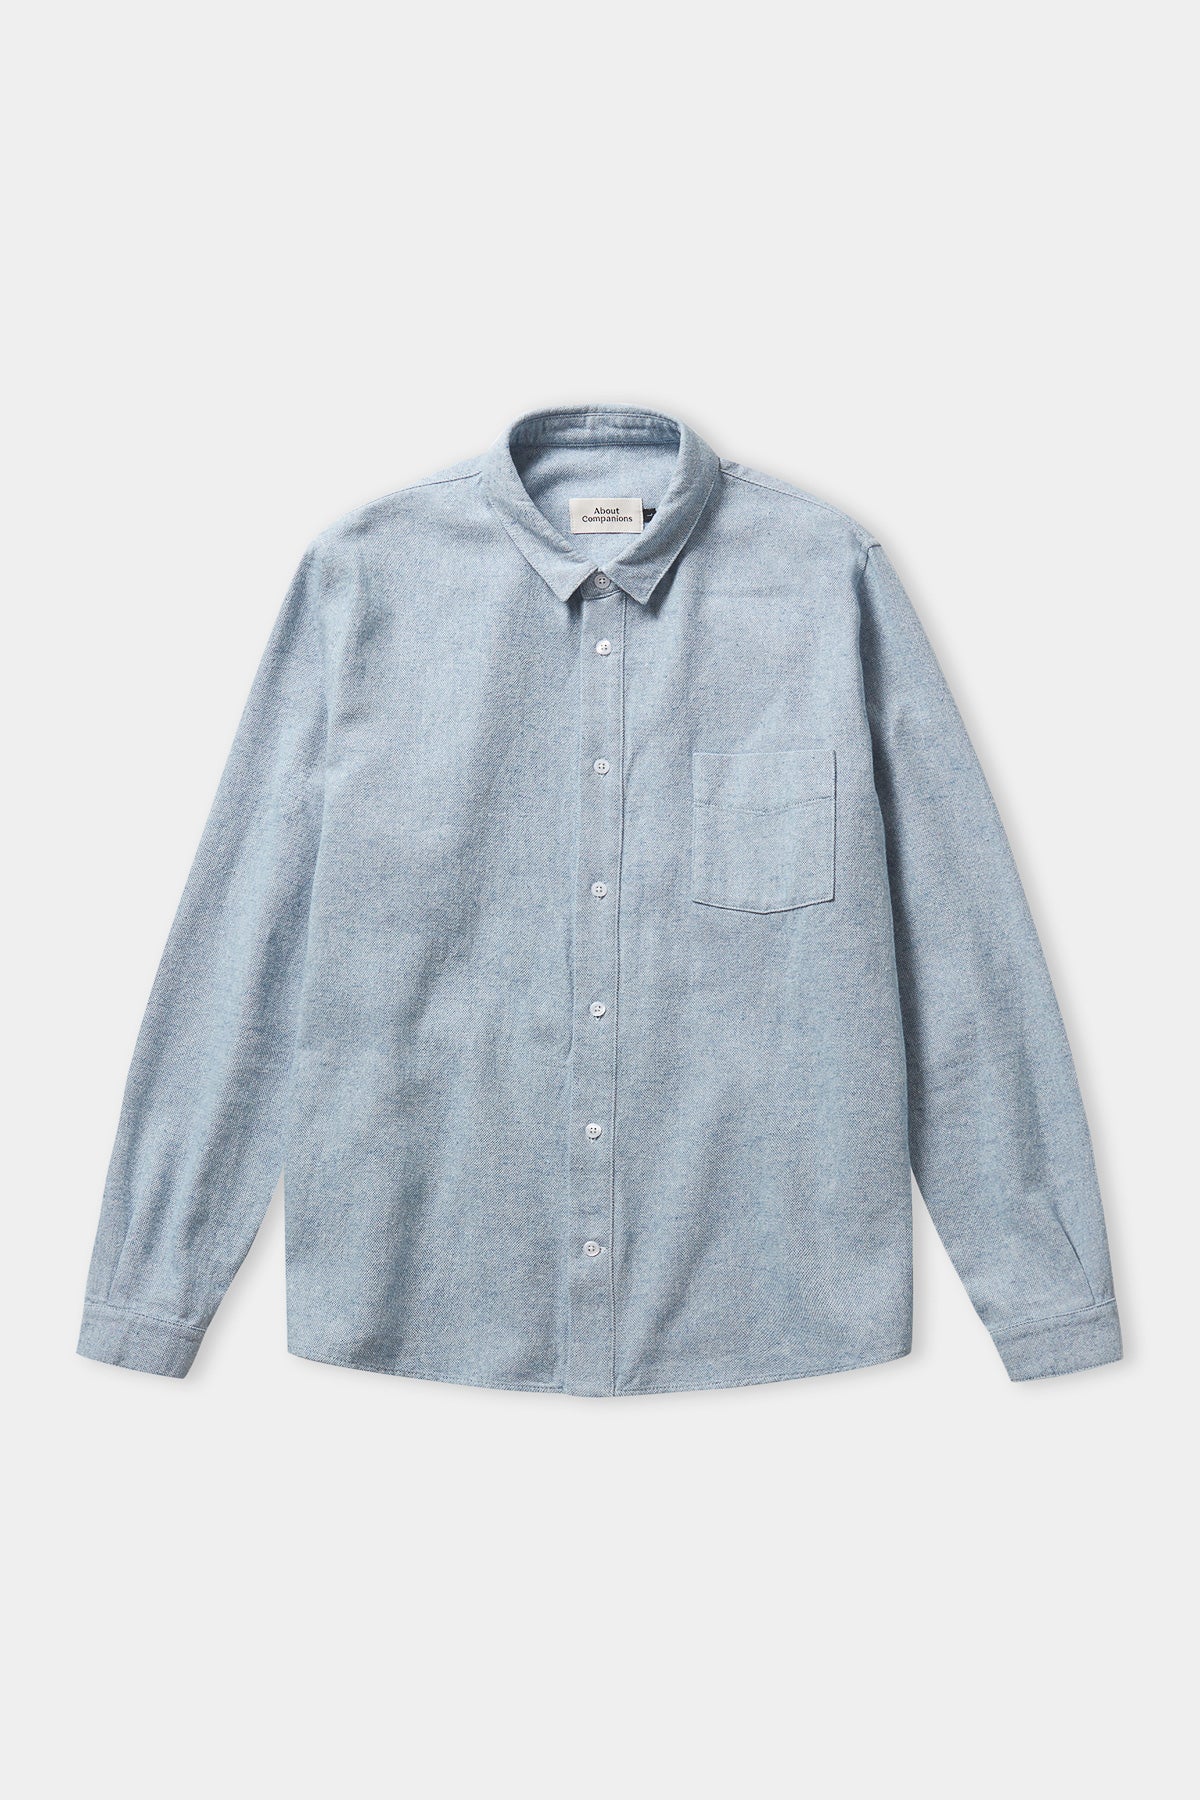 SIMON shirt eco mid blue flannel